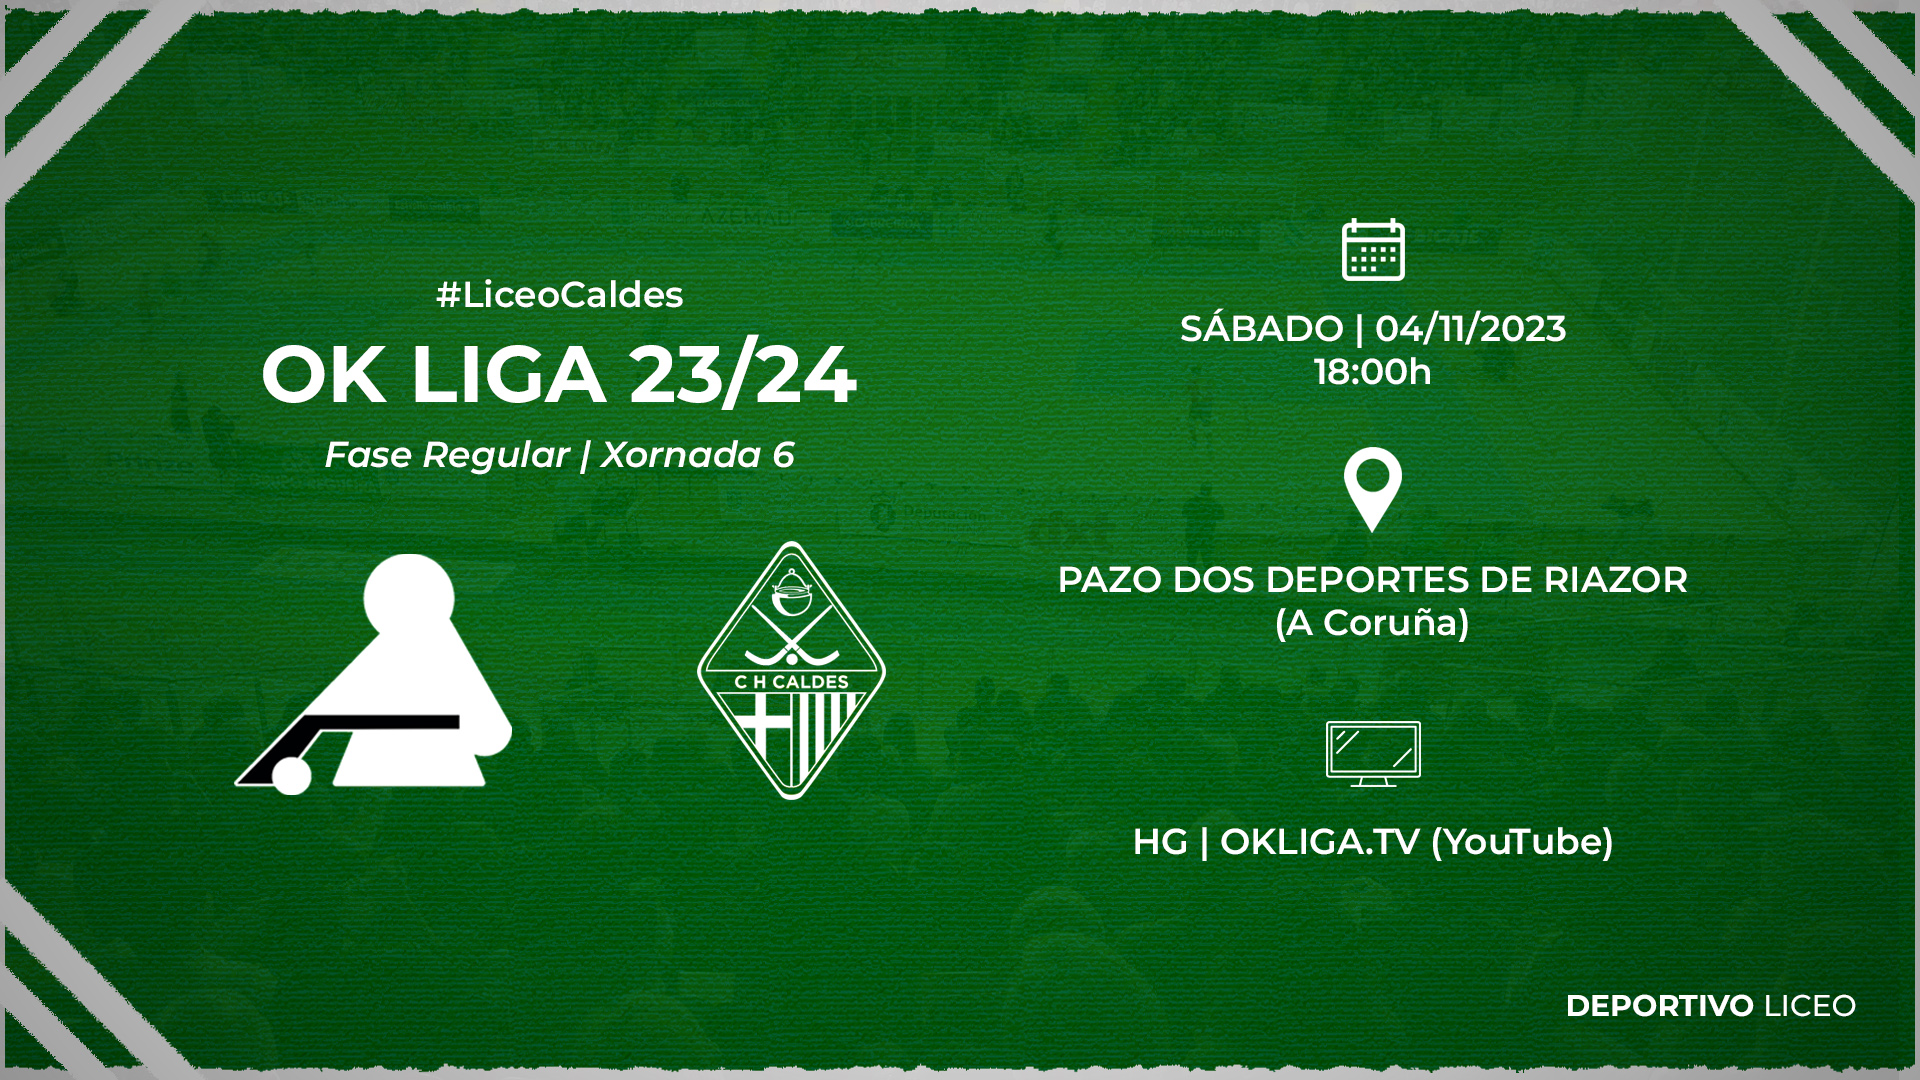 #LiceoCaldes | ENTRADAS para a xornada 6 da OK Liga 23/24